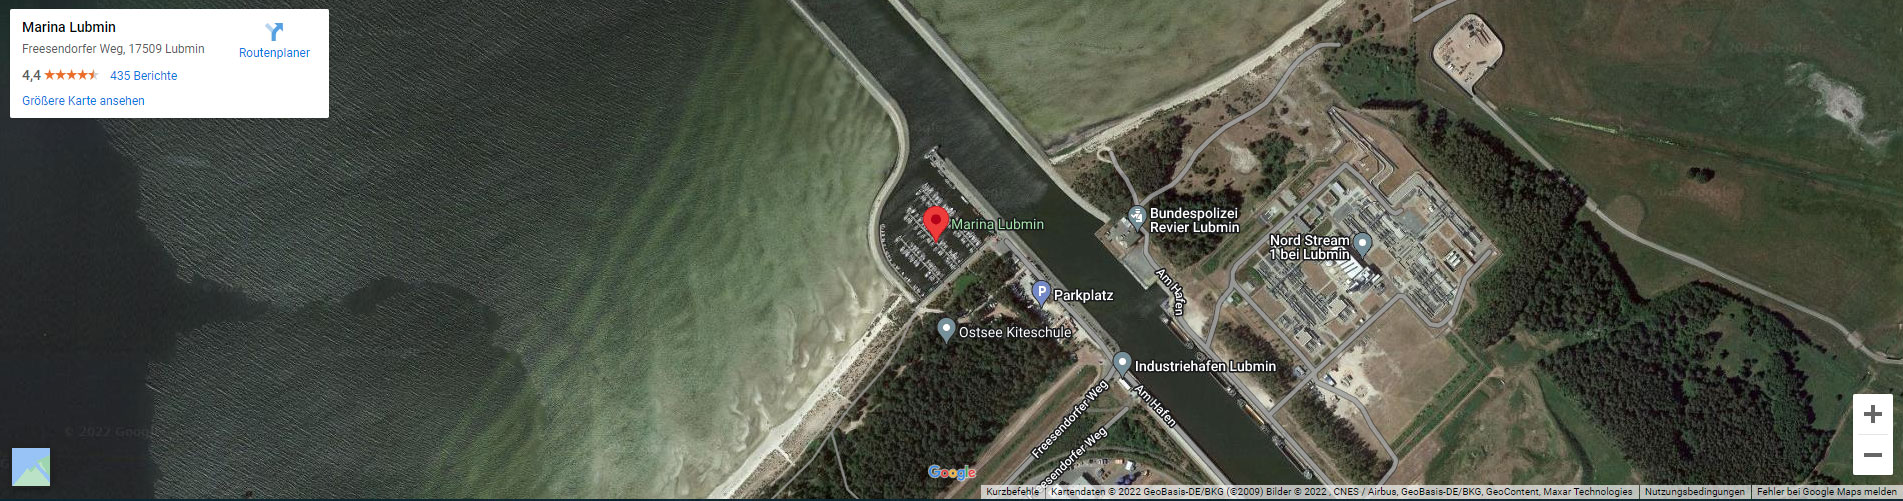 google-maps-marina-lubmin-an-der-schönen-boddenkueste